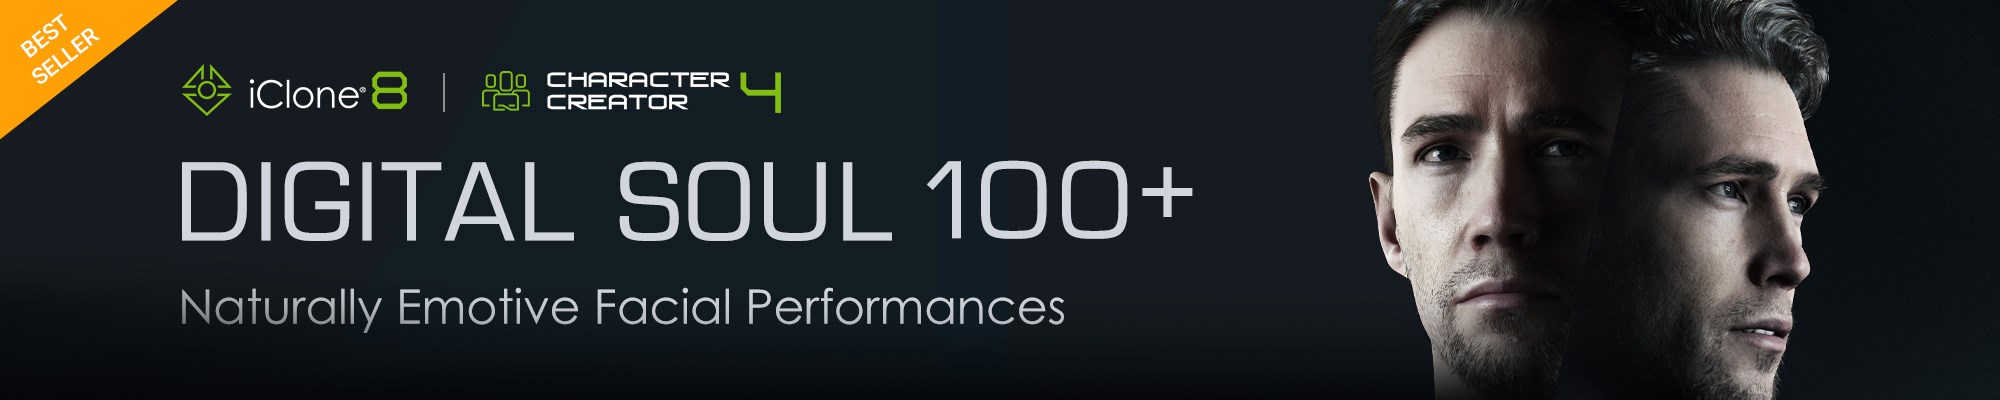 Naturally Emotive Facial Performances - Digital Soul 100+